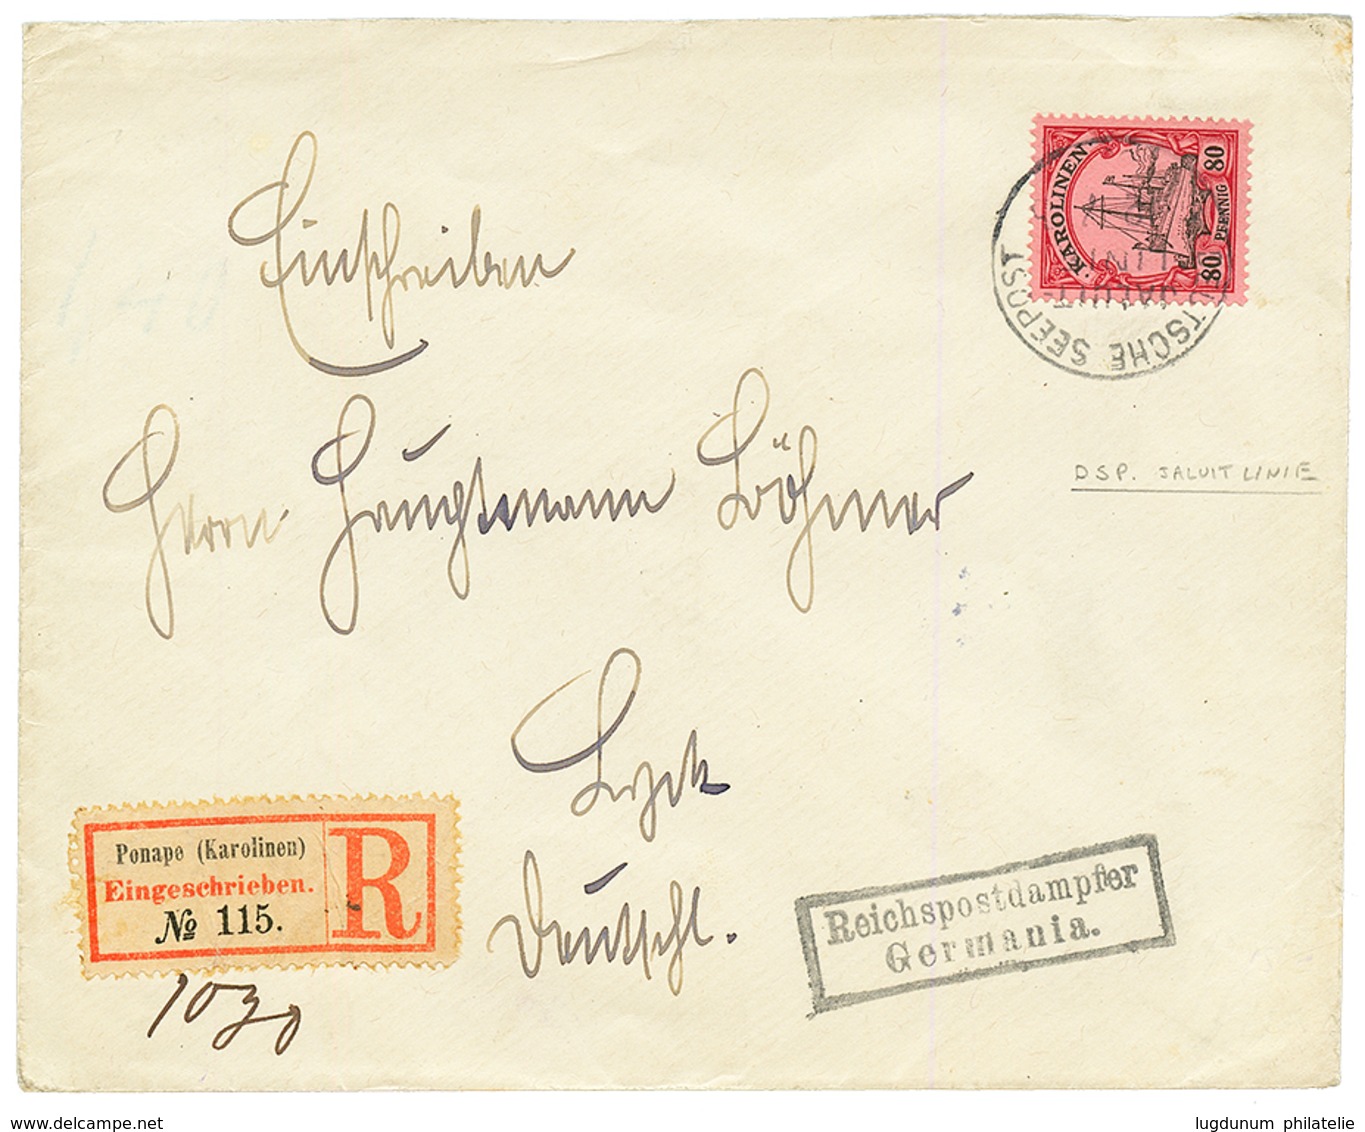 CAROLINES - MARITIME : 1905 80pf Canc. DEUTSCHE SEEPOST JALUIT LINIE + REGISTERED Label PONAPE To GERMANY. Vf. - Carolines